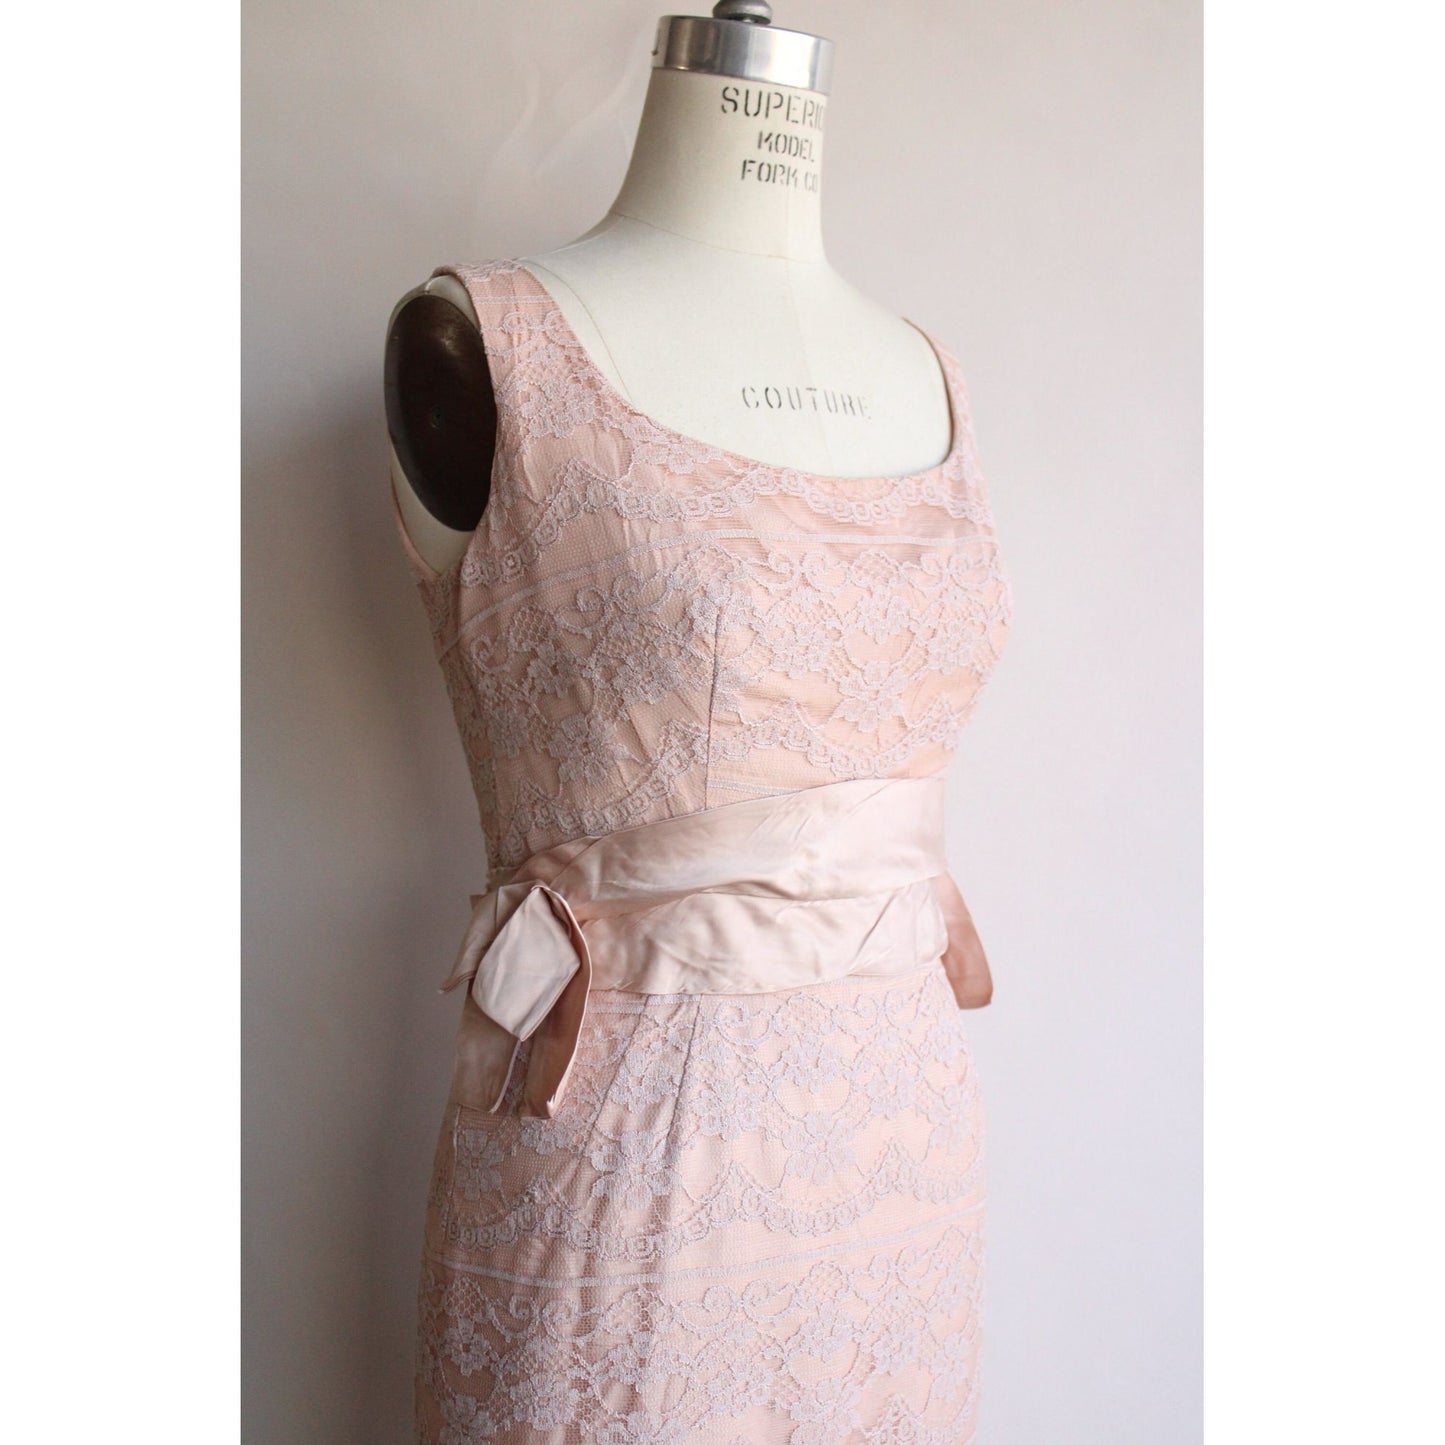 Vintage 1950s 1960s Pink Lace Wiggle Dress